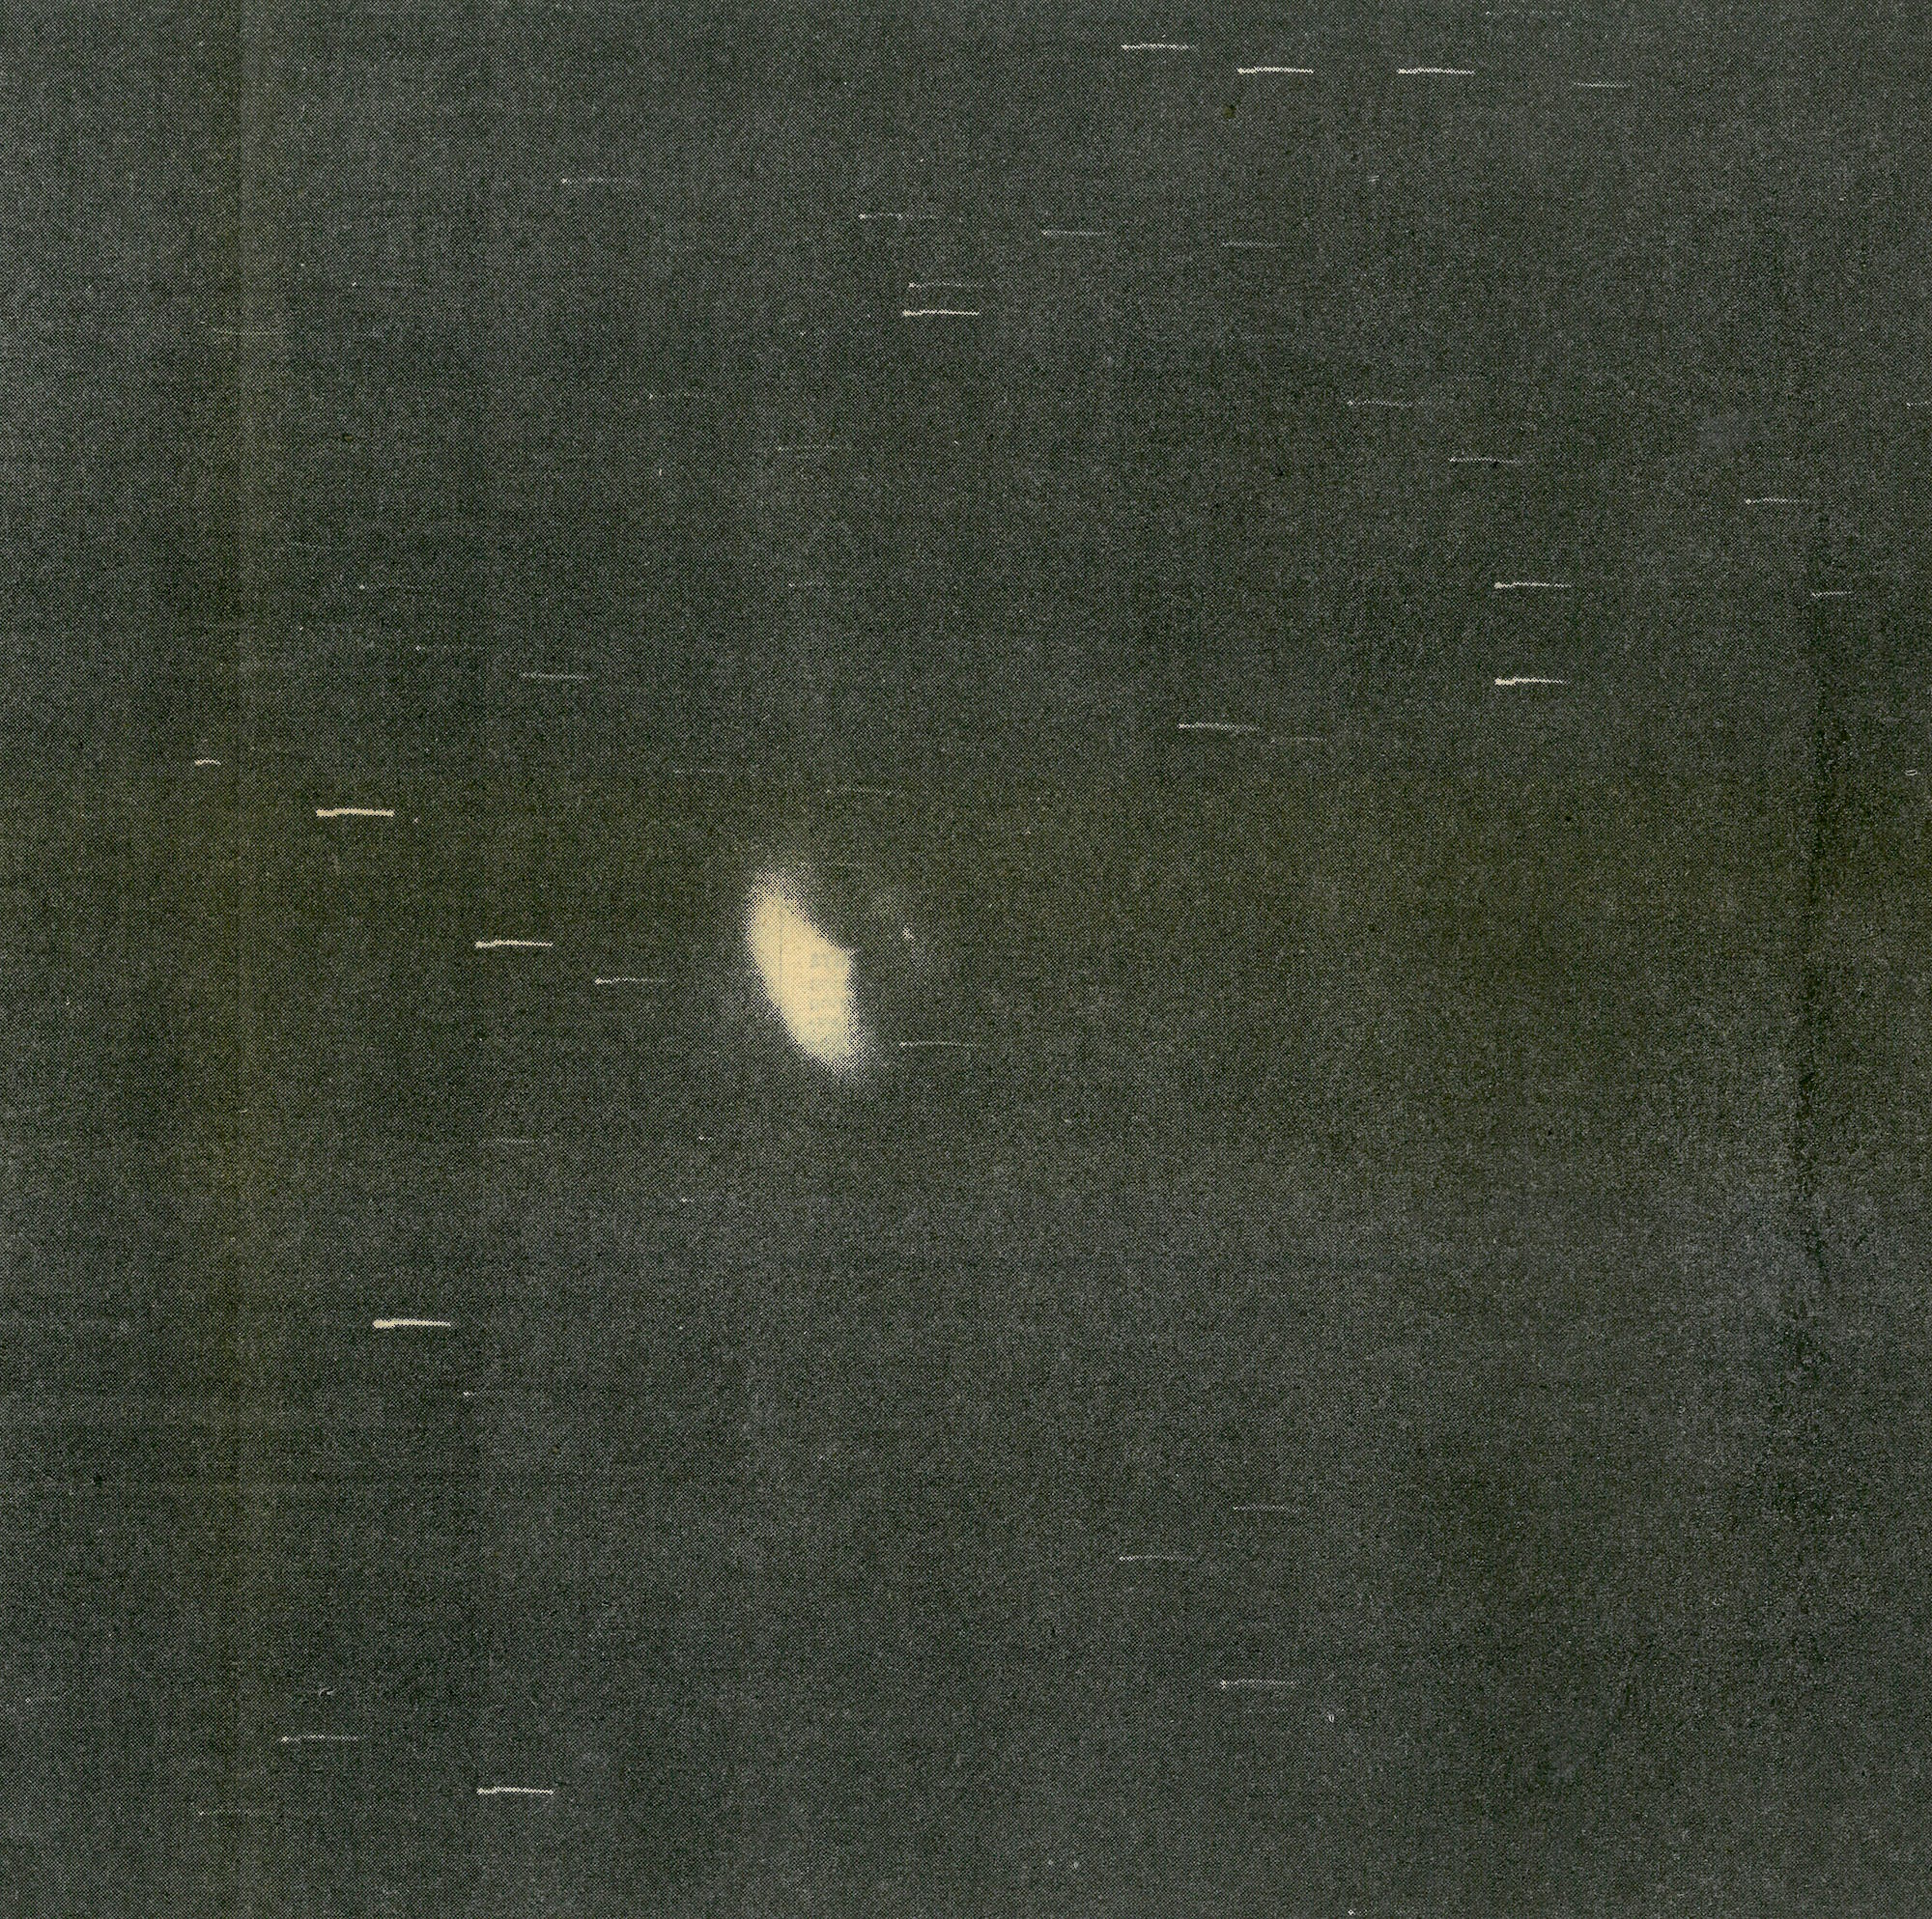 Hatfield photo of Apollo 8 fuel dump